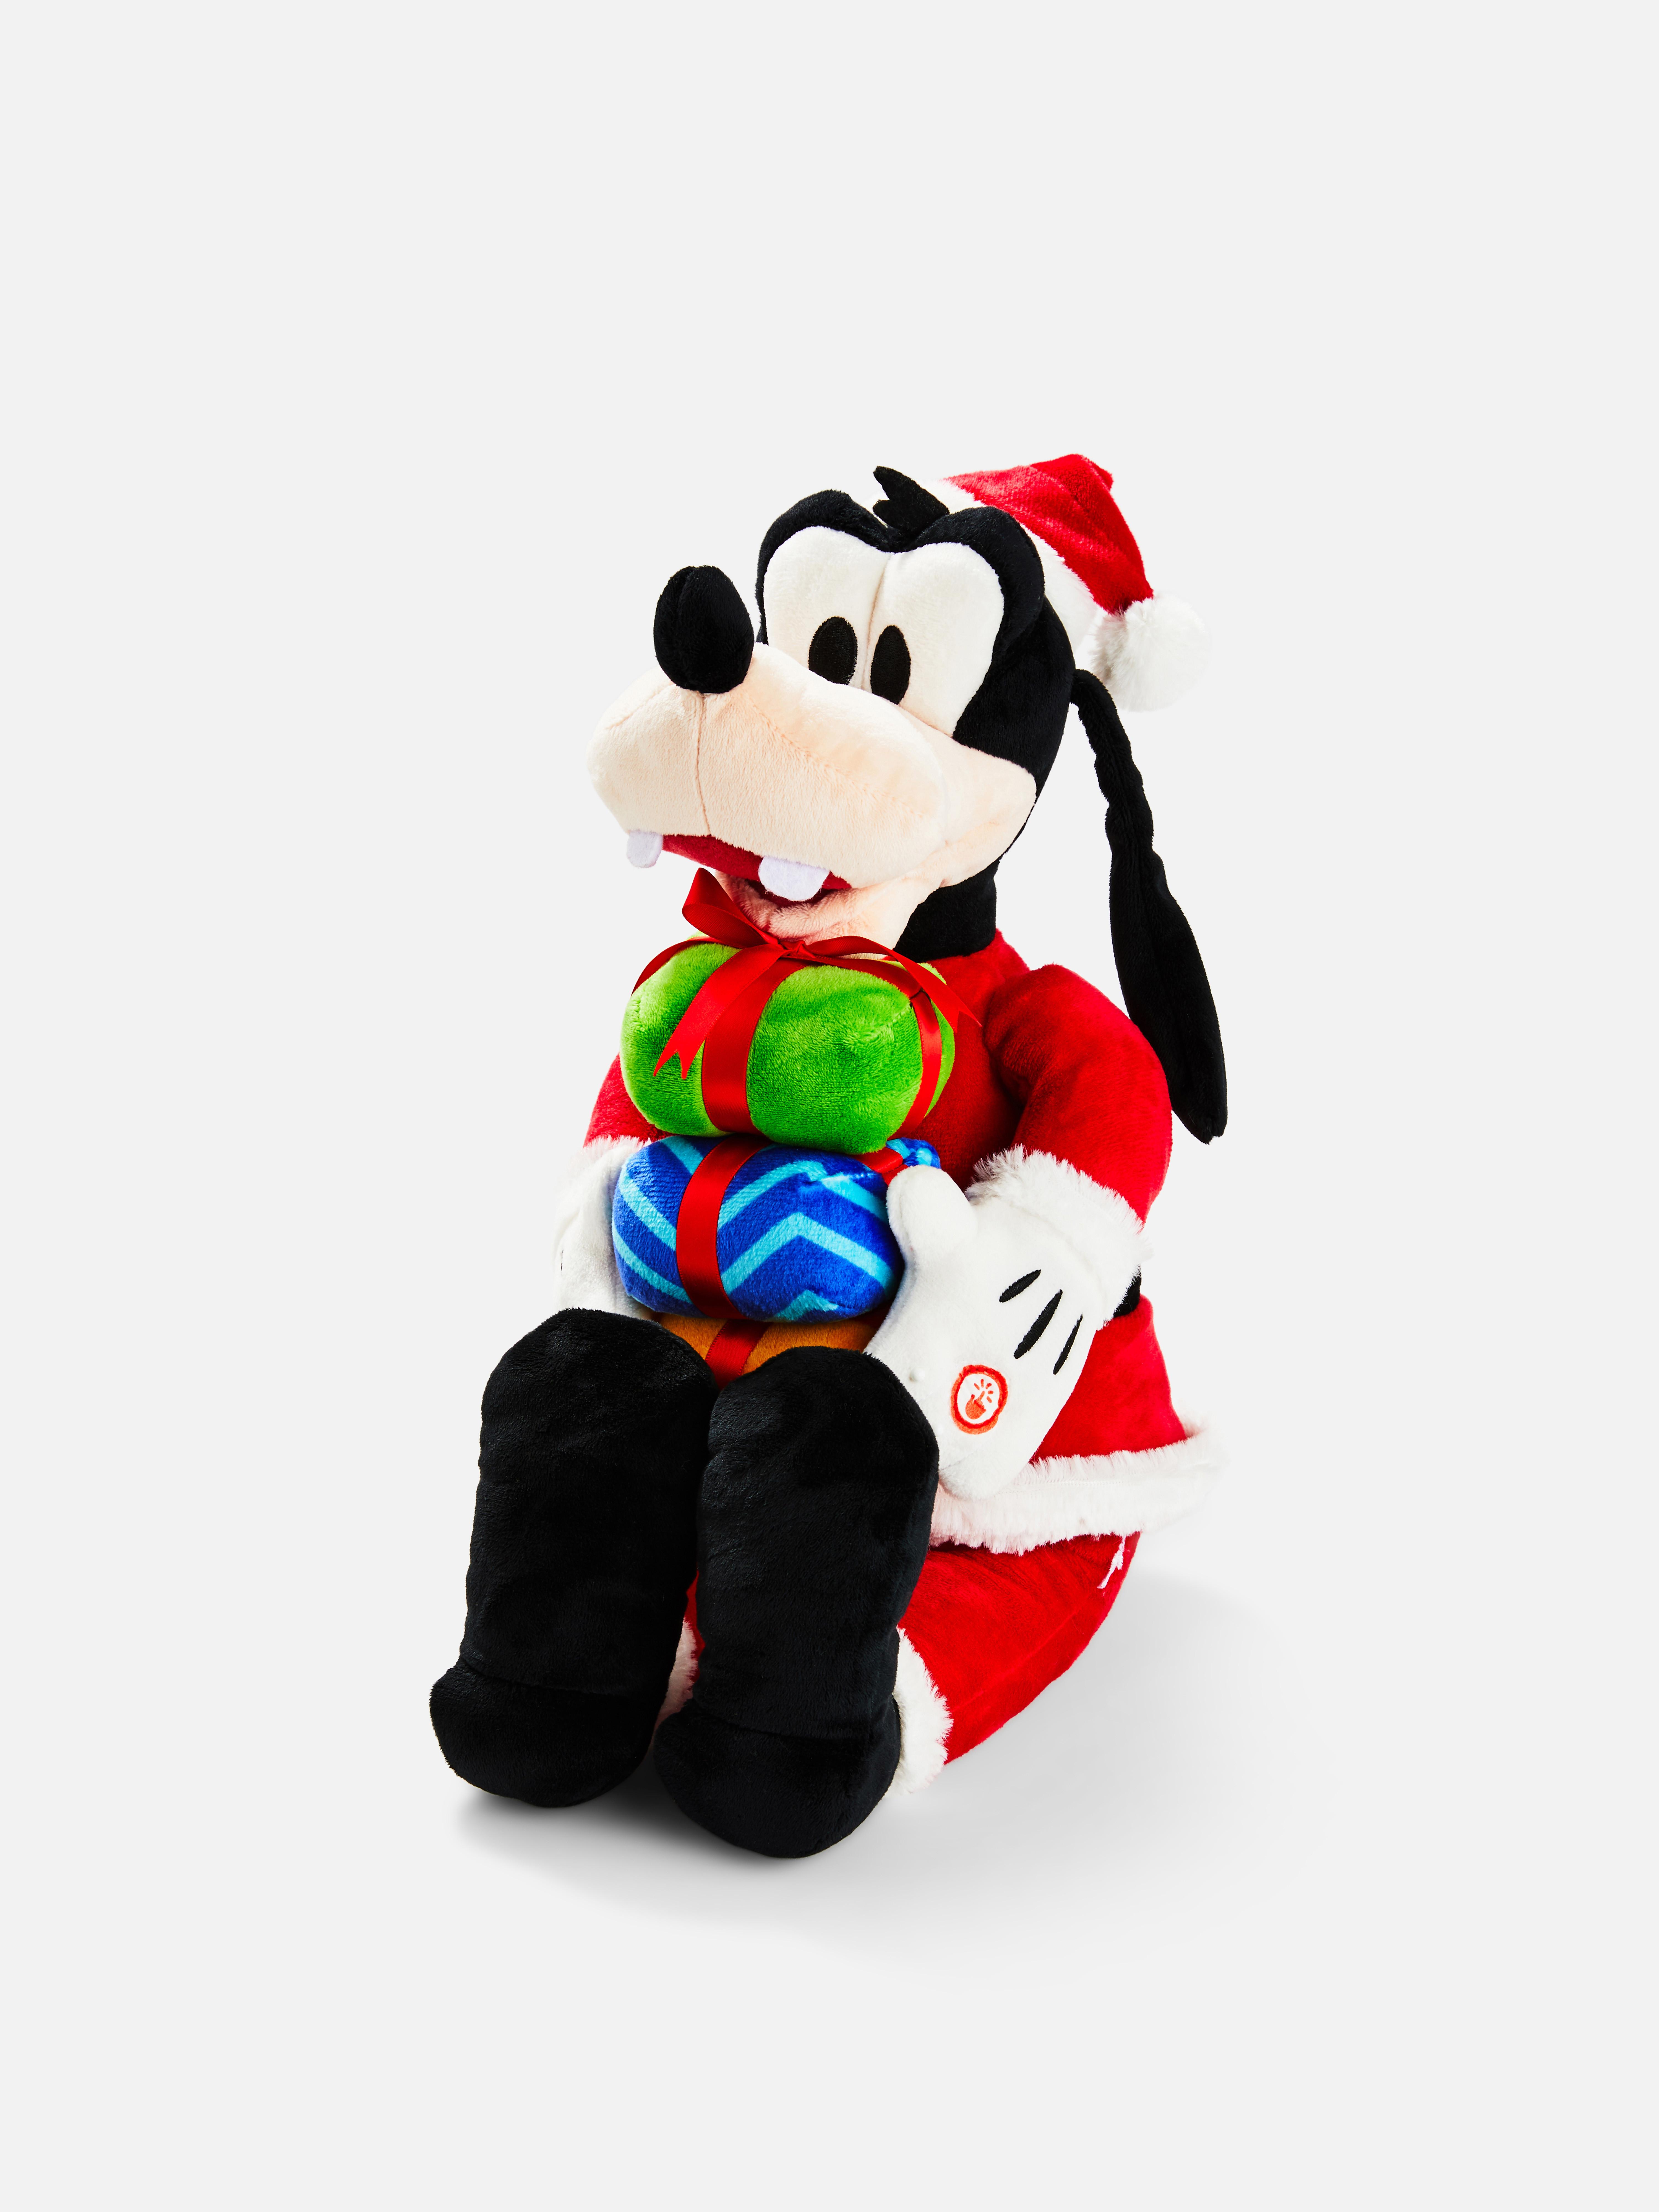 Disney’s Goofy Plush Toy